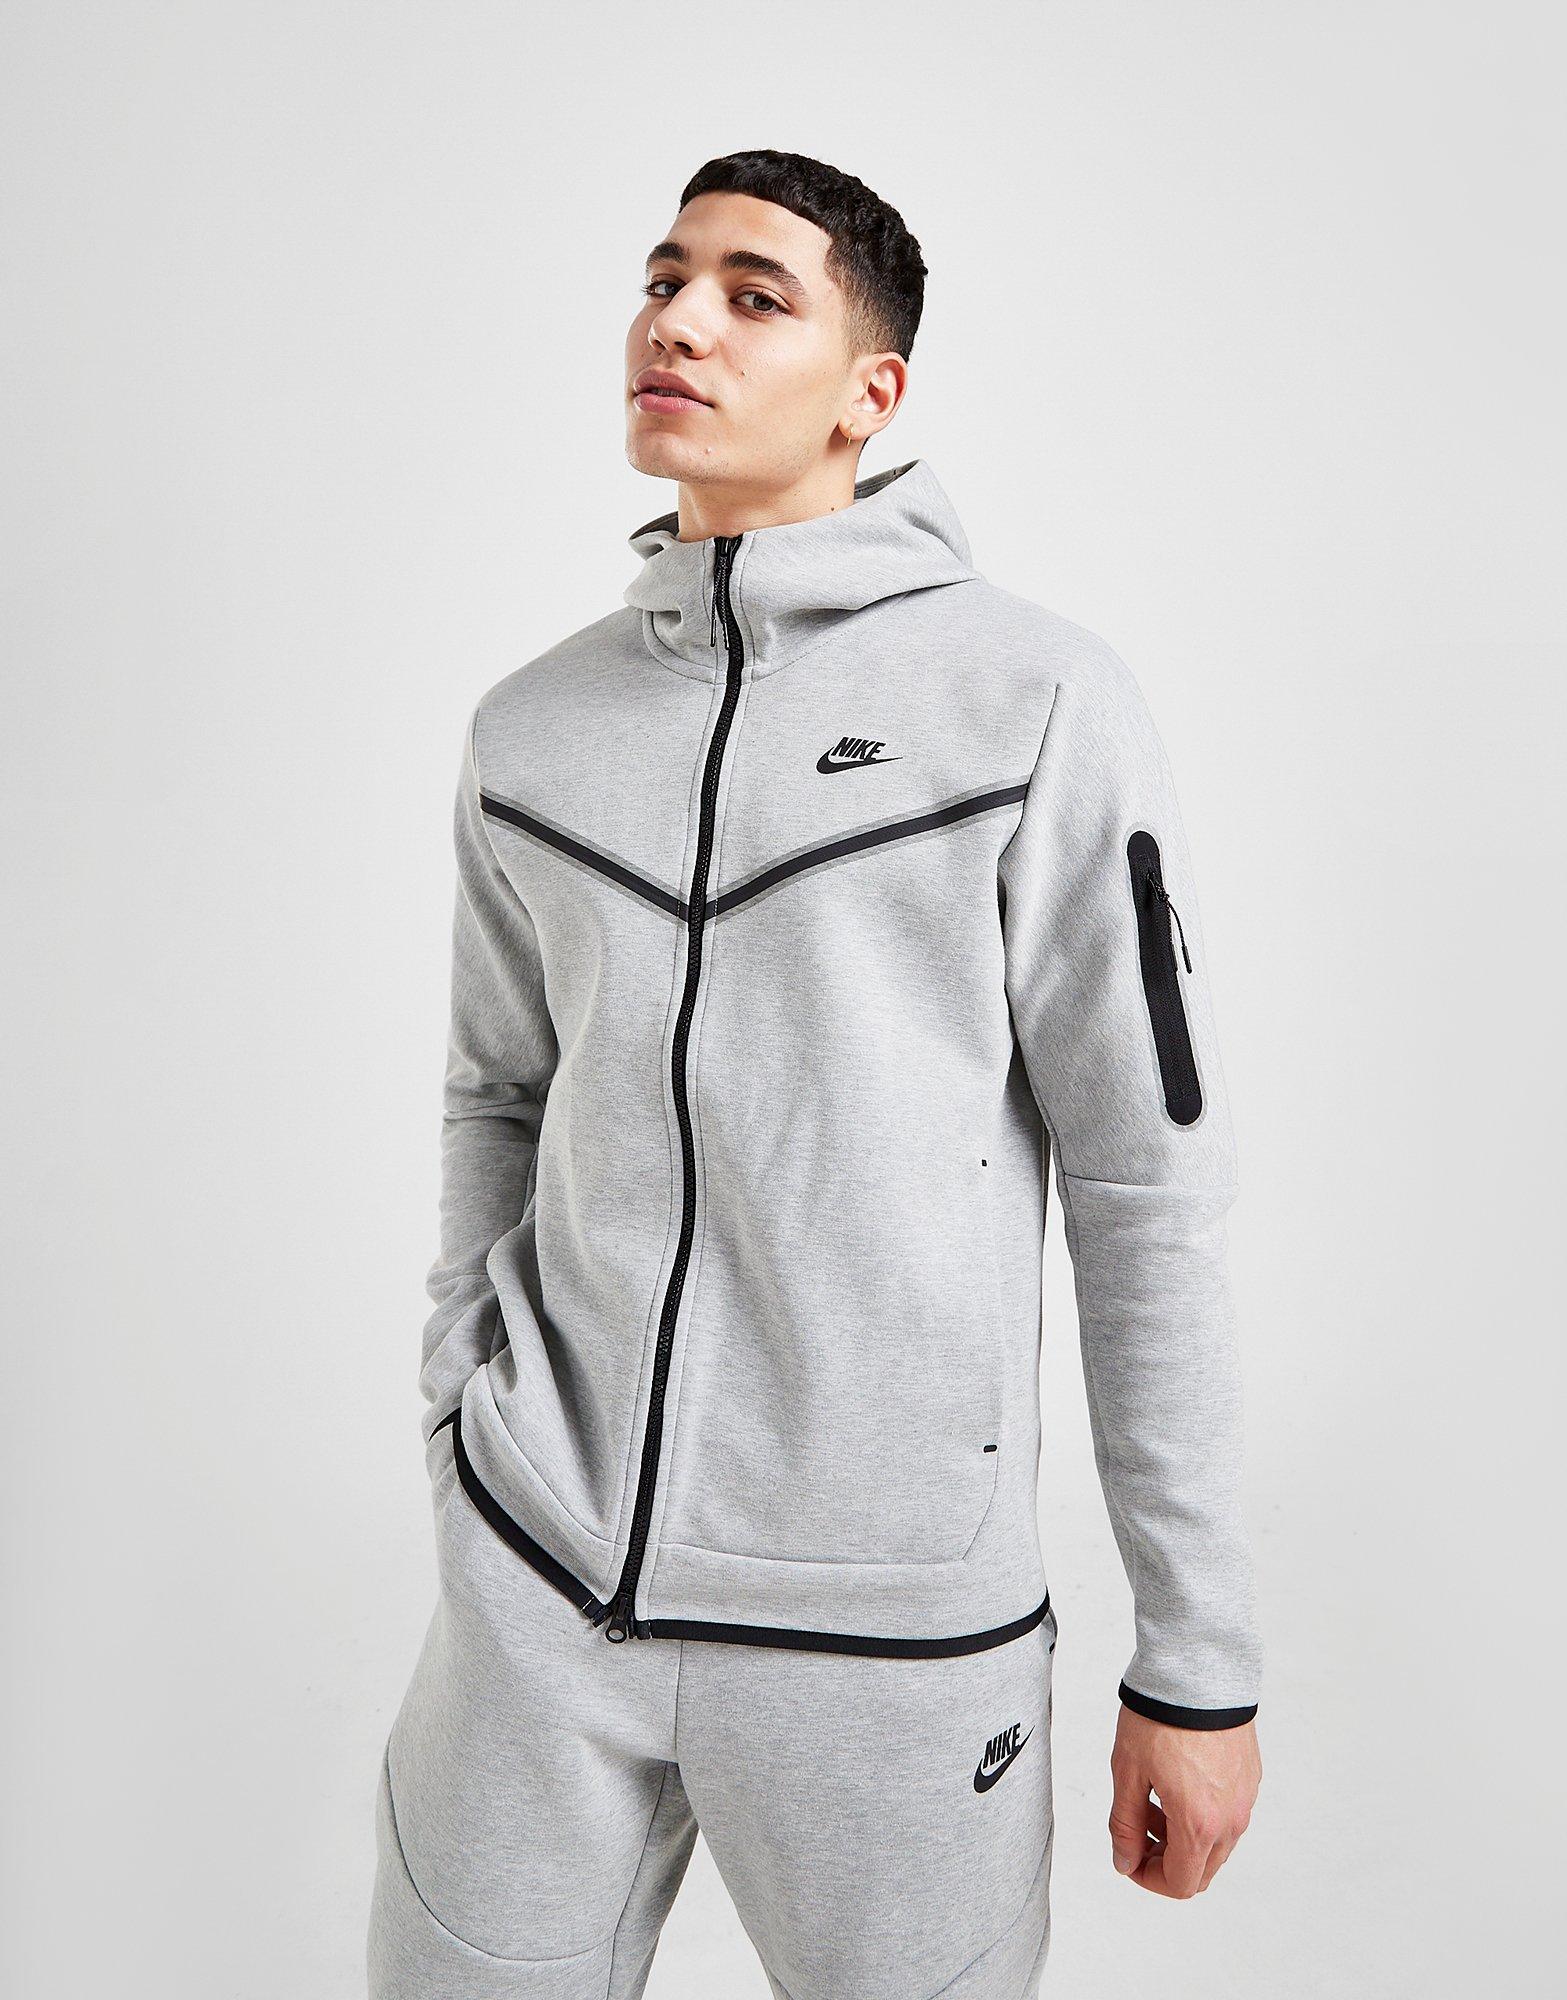 Grey Nike Tech Hoodie - Sports